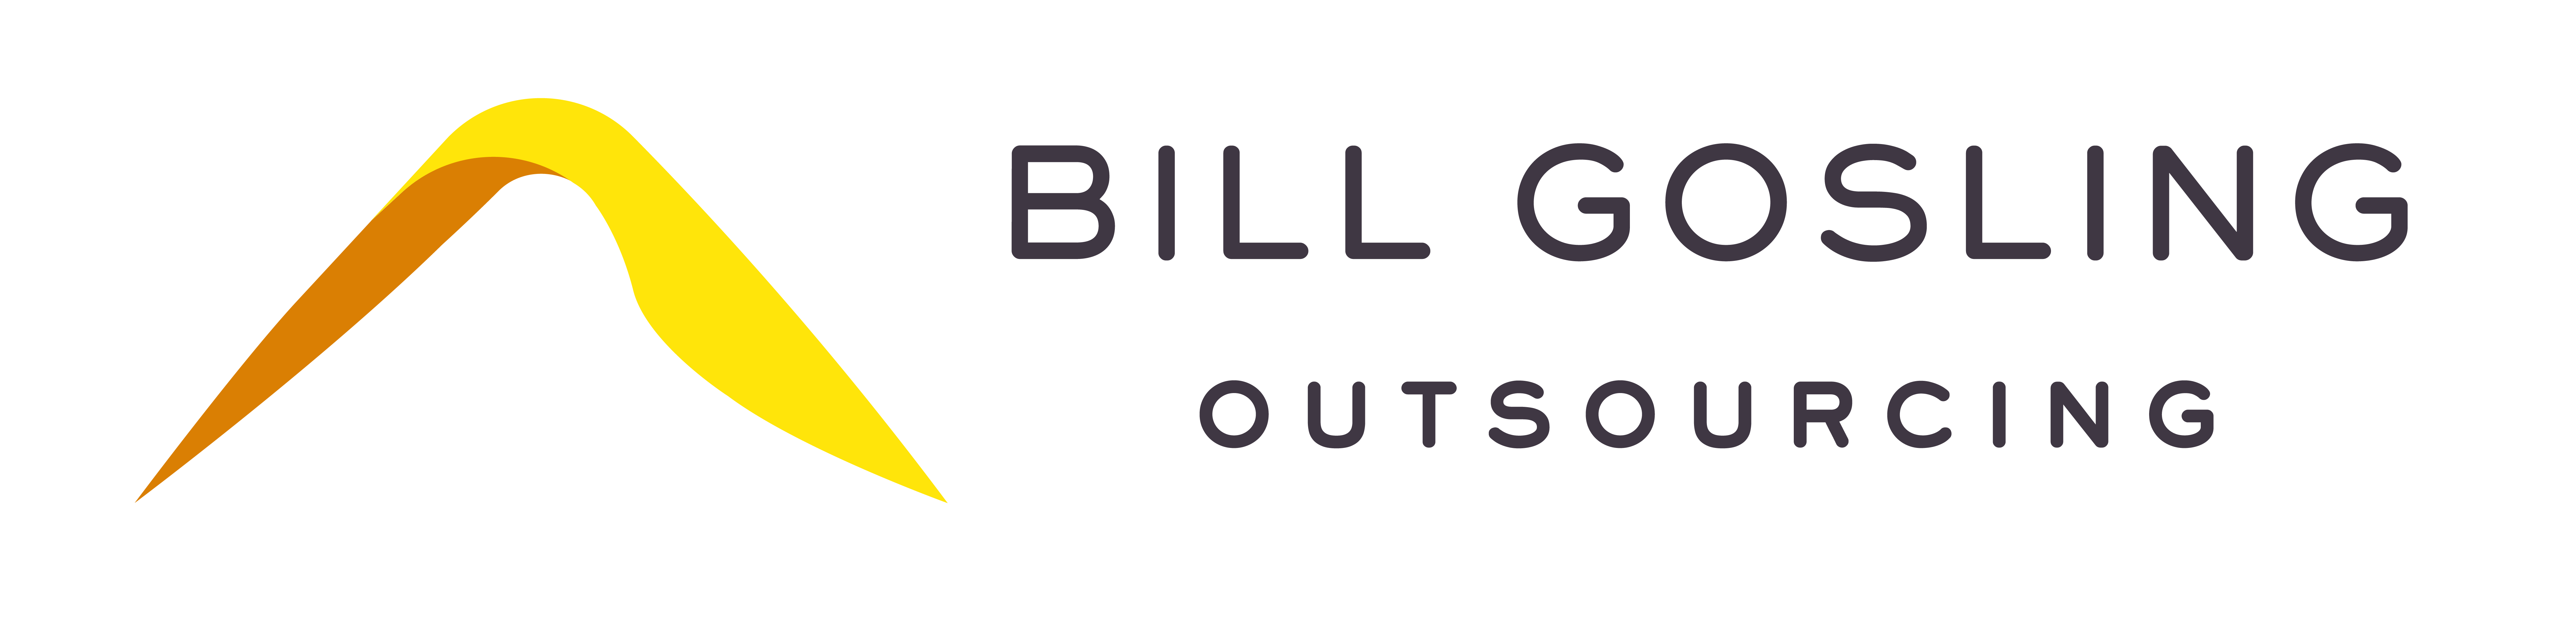 Bill Gosling logo Horizontal-02